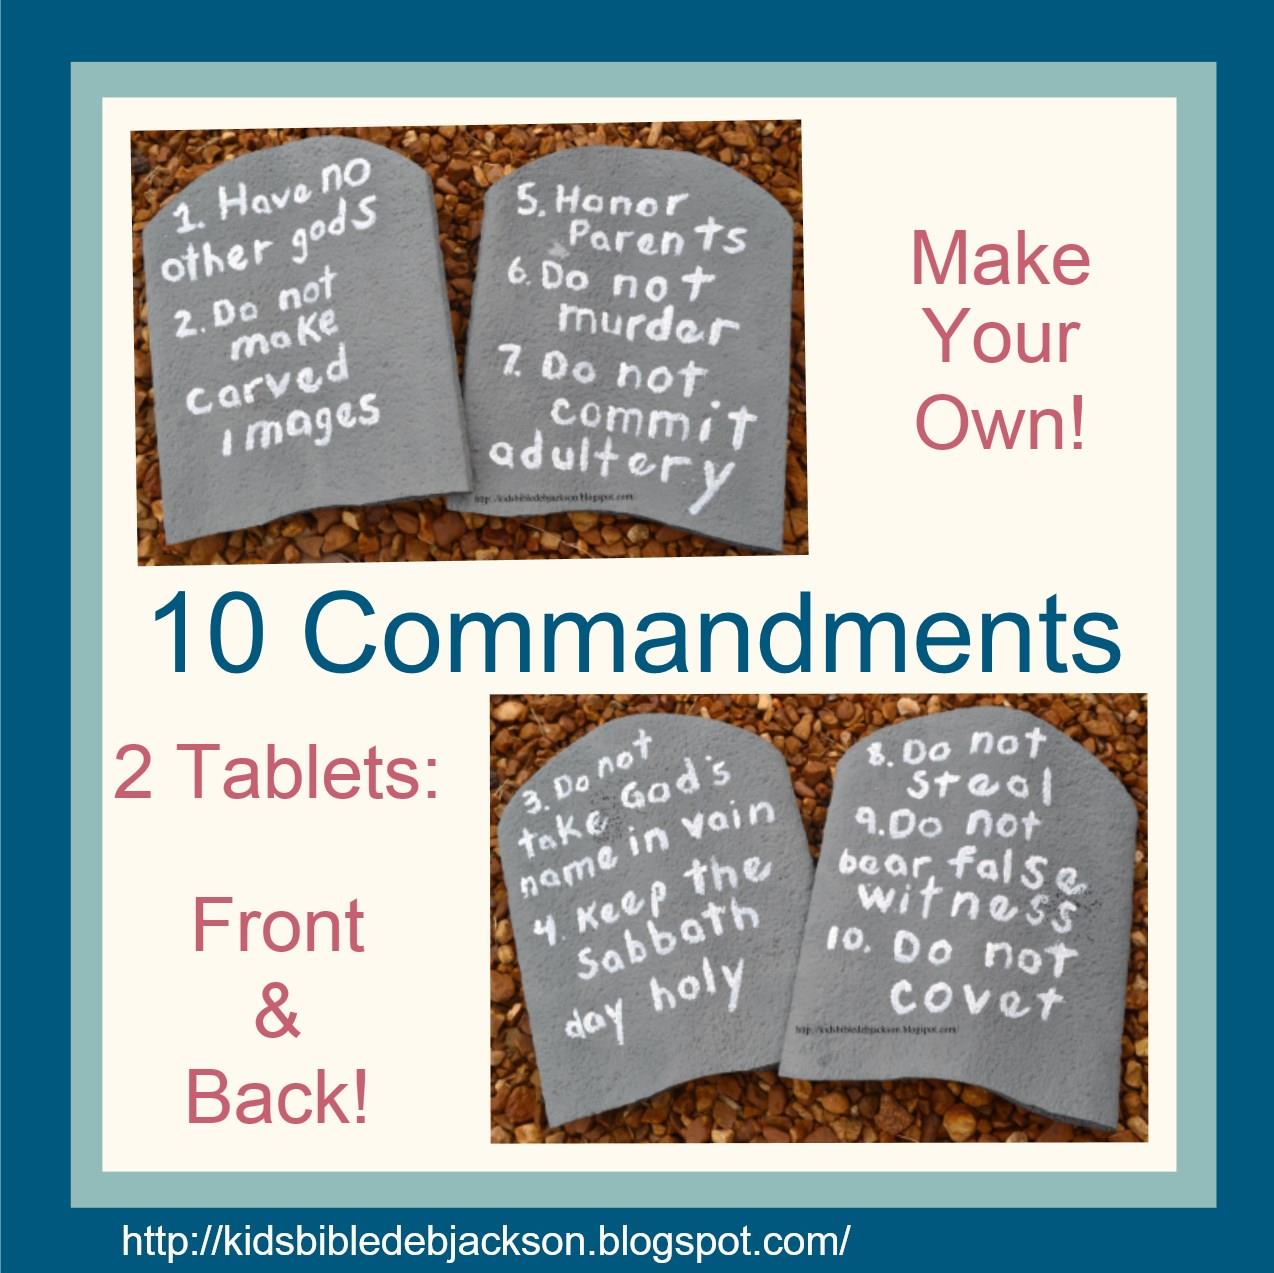 Make Your Own 10 Commandments visual!